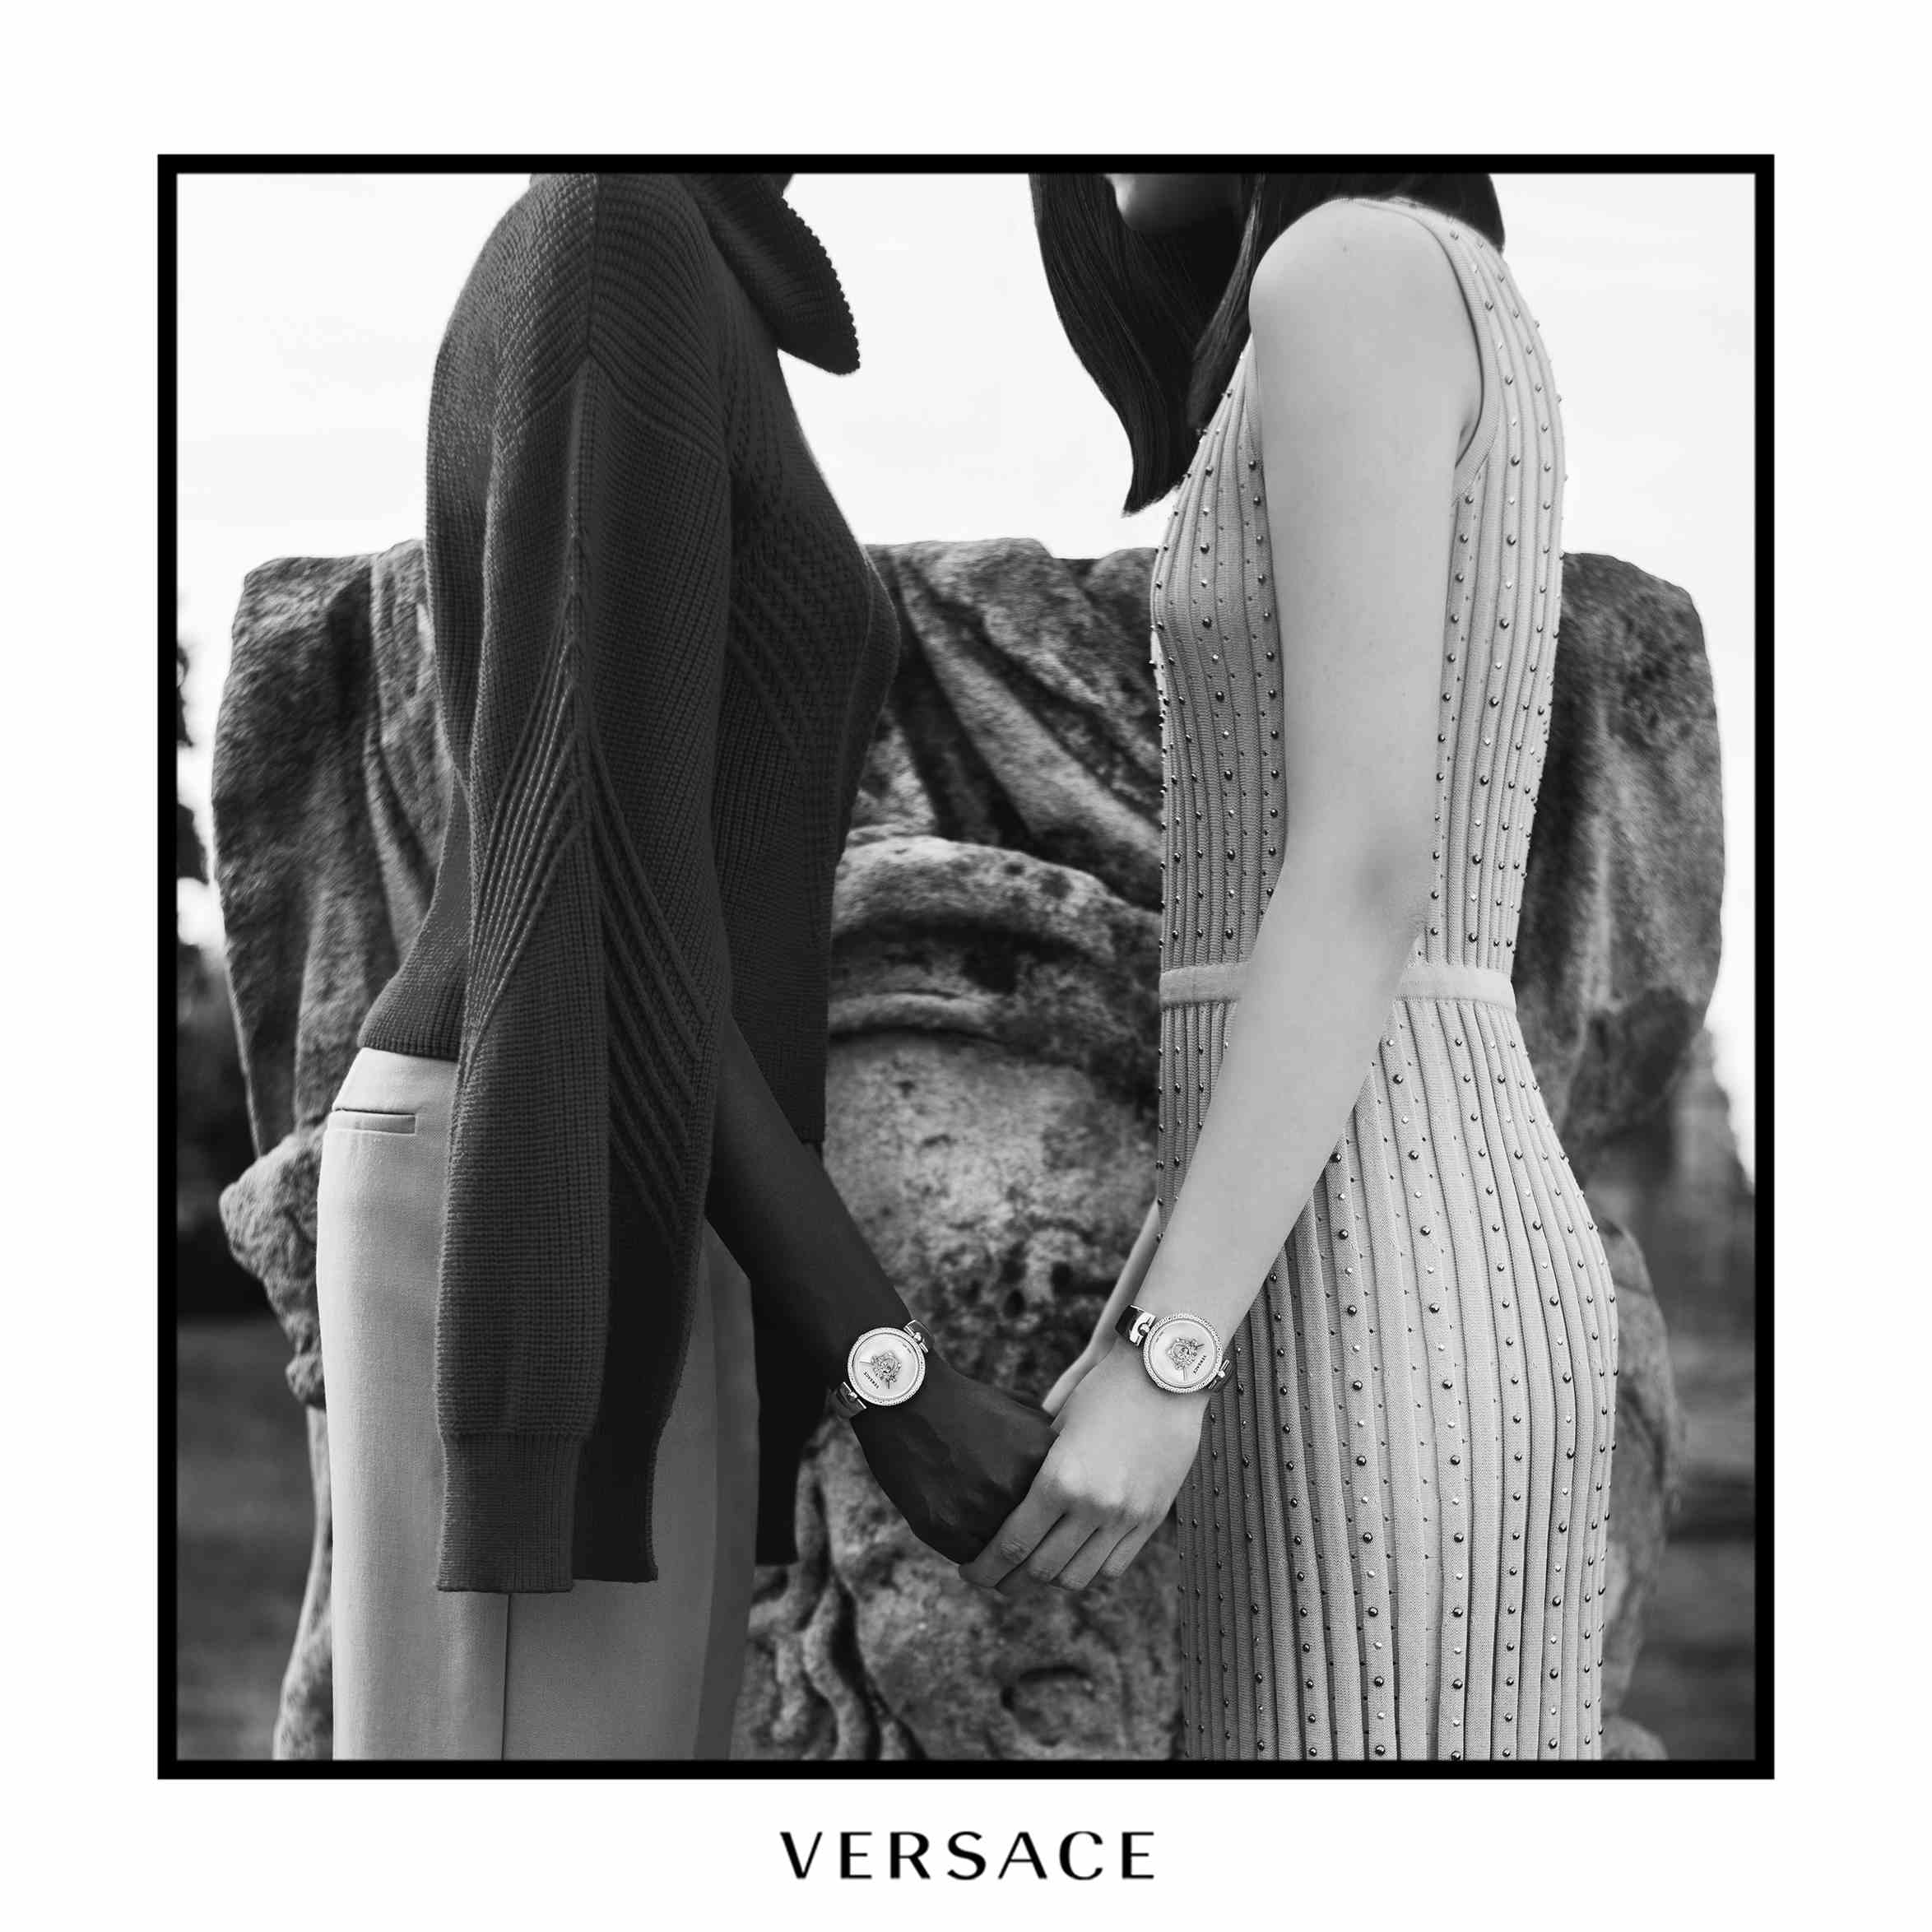 VERSACE - Versace Manifesto
Photographer: Luca Finotti
Location: Belgioioso, Italy